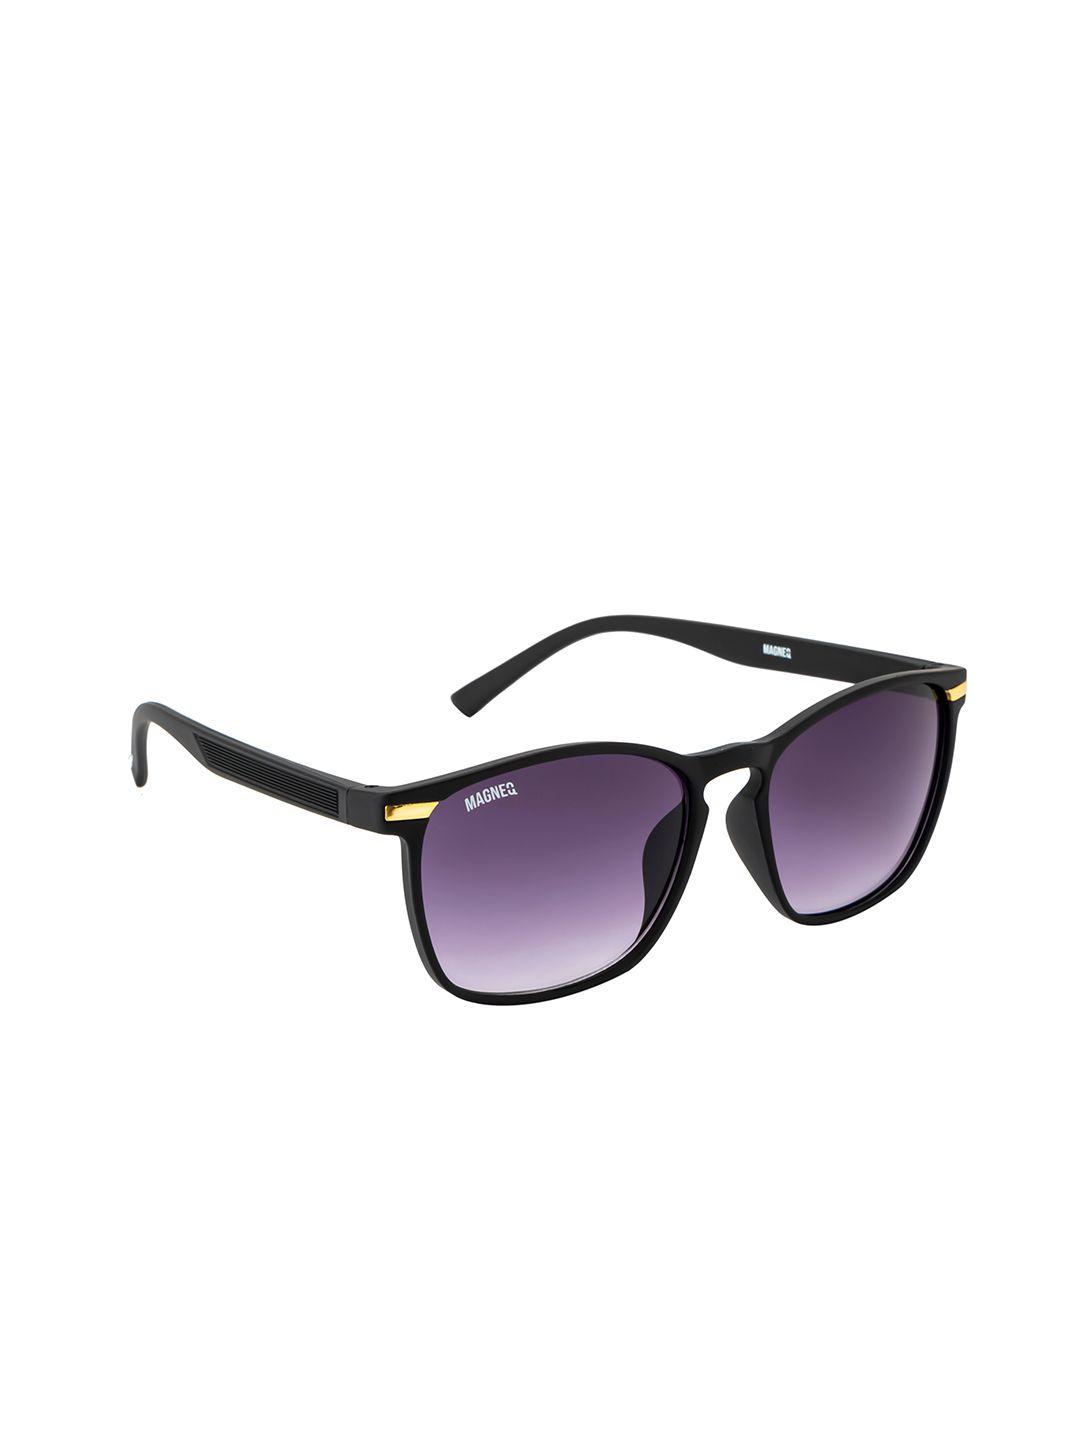 magneq lens & wayfarer sunglasses with polarised & uv protected lens mg 7366/s p1 5218